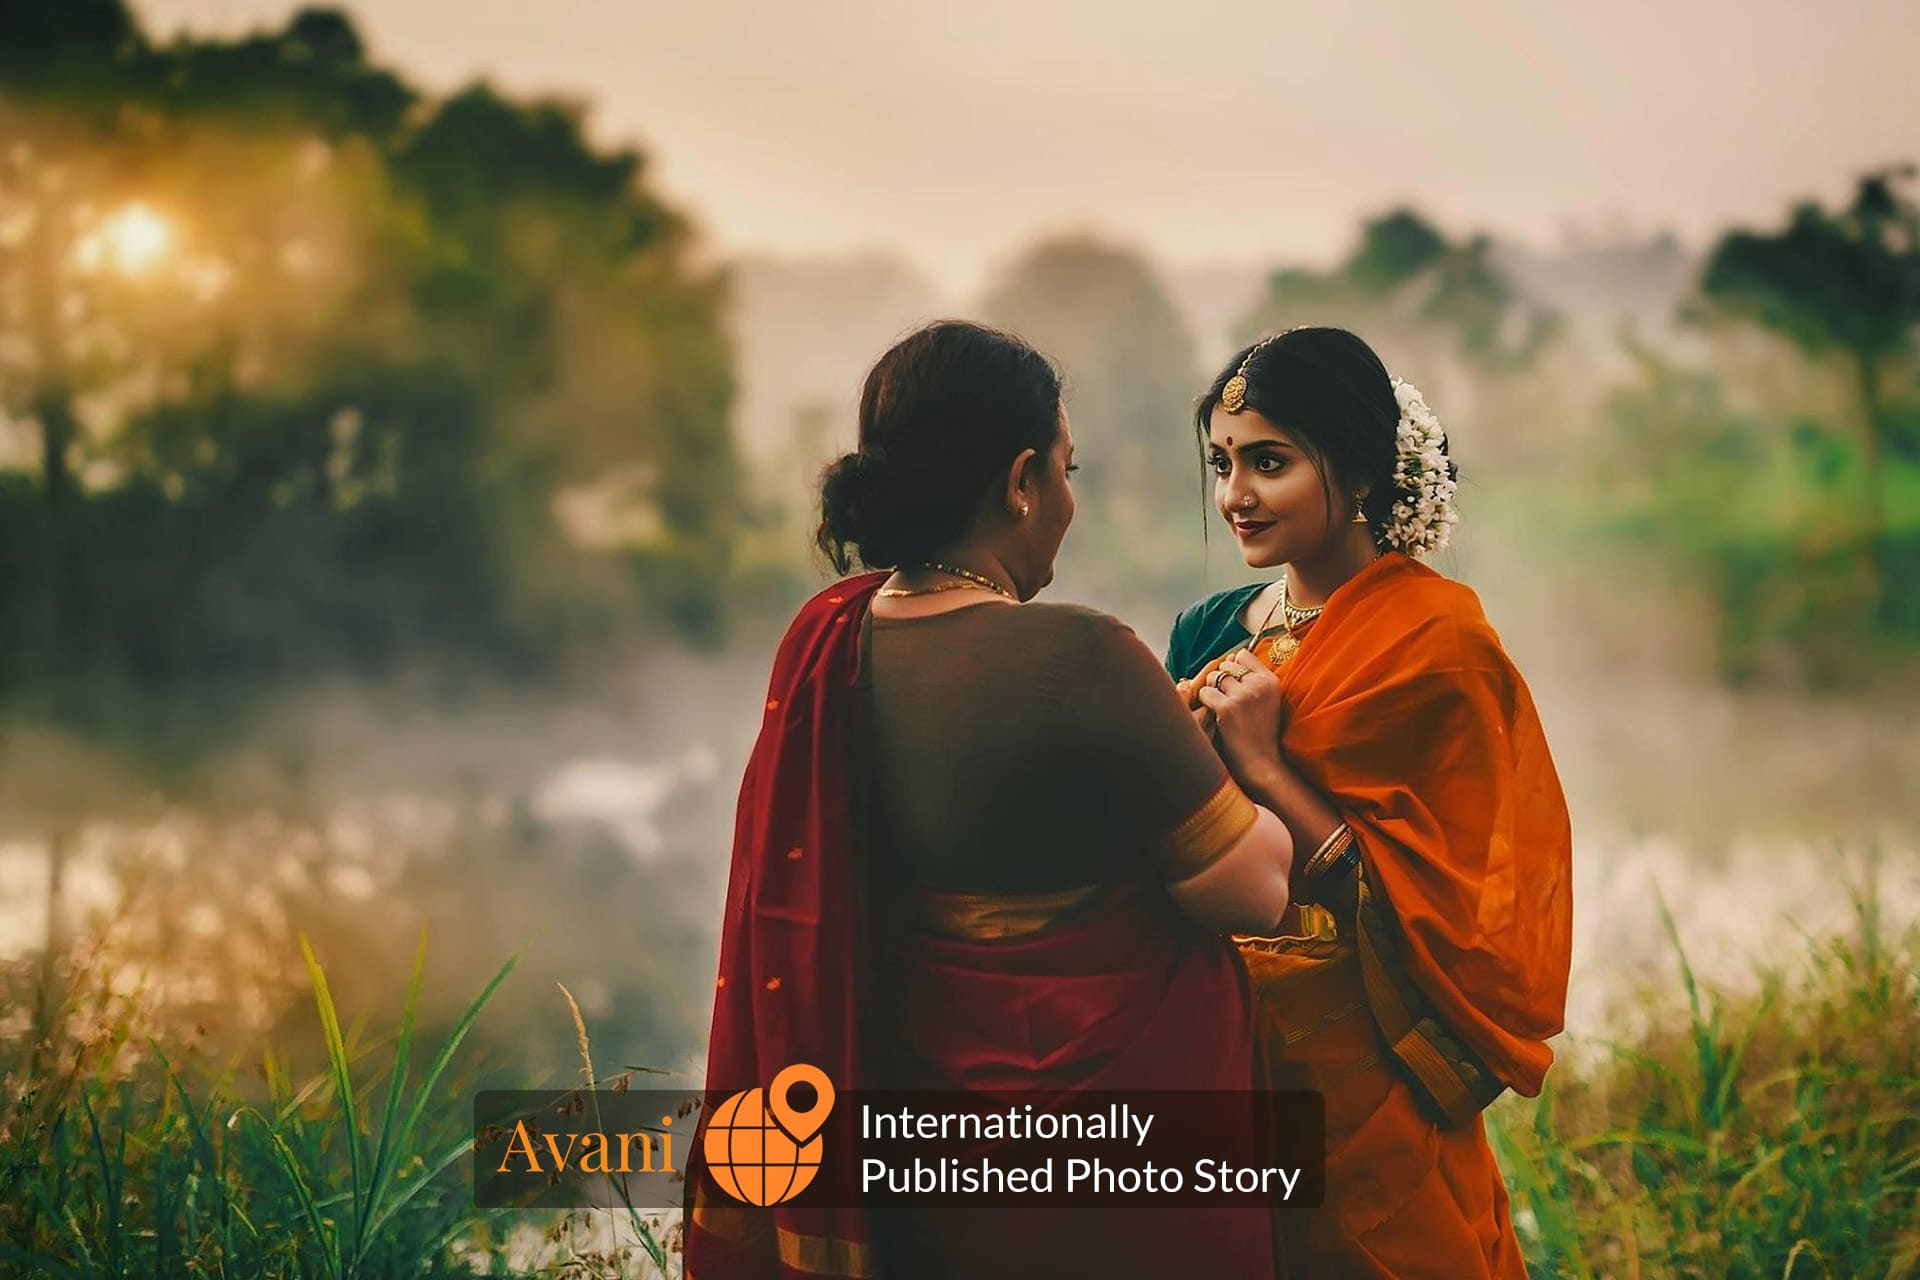 Avani an internationally acclaimed photo story by Arjun Kamath